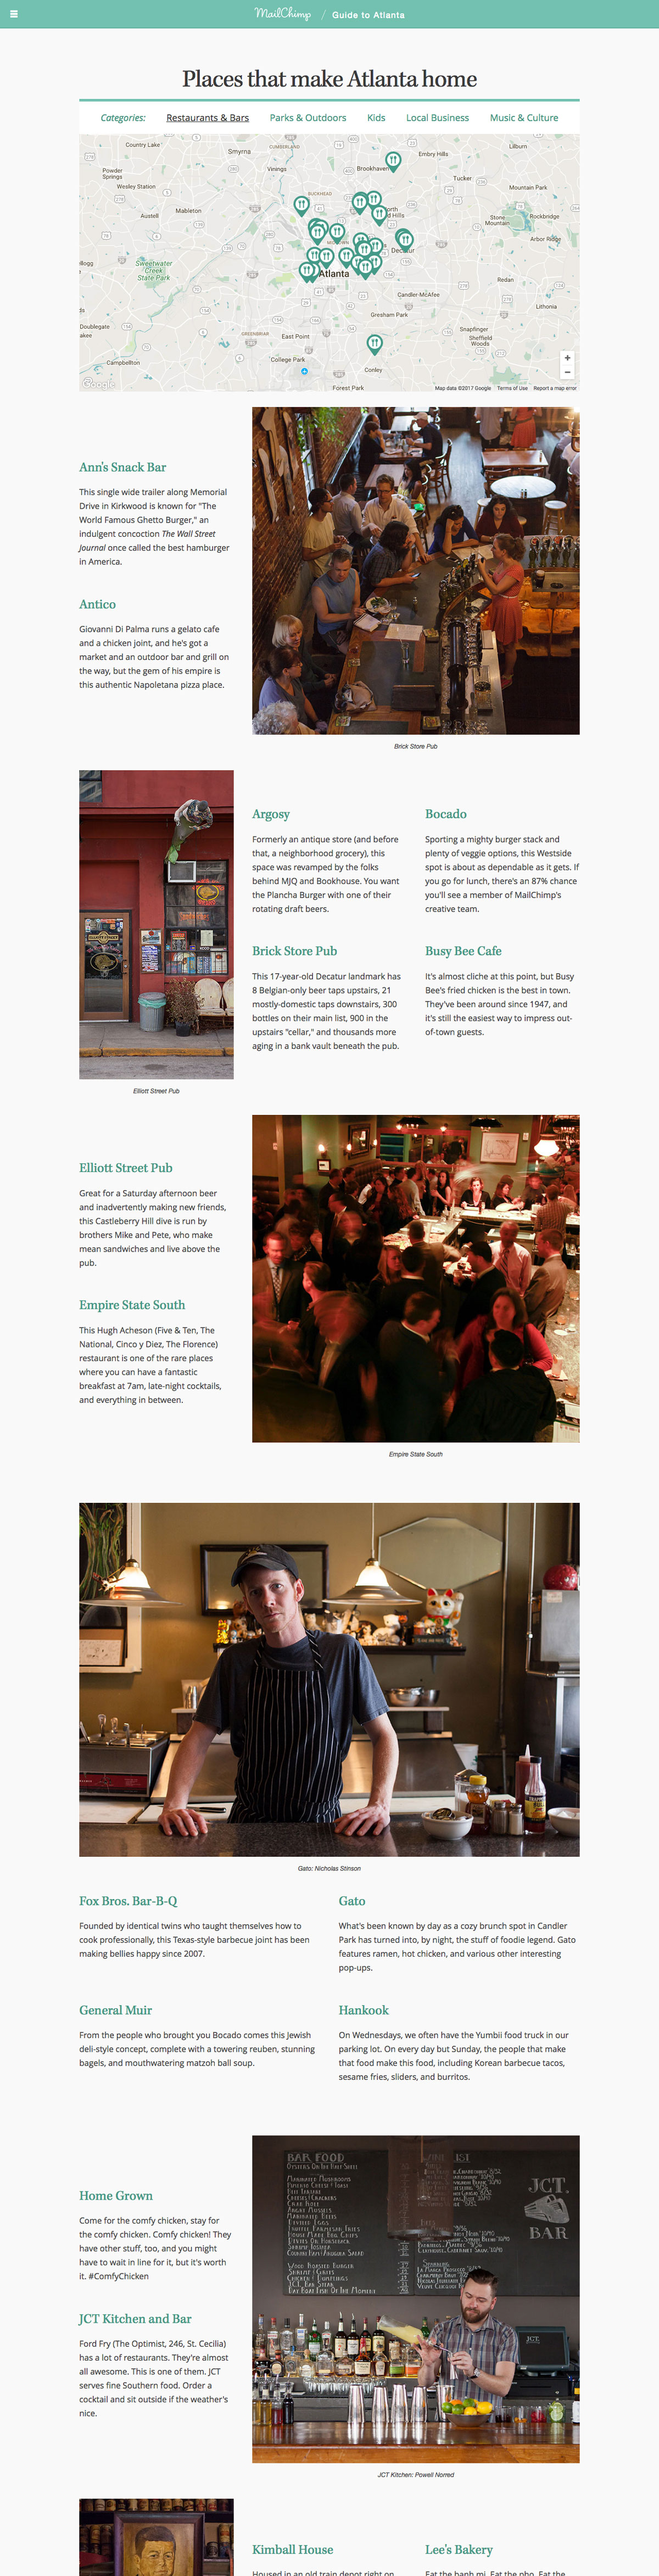 Screenshot of the Guide to Atlanta website